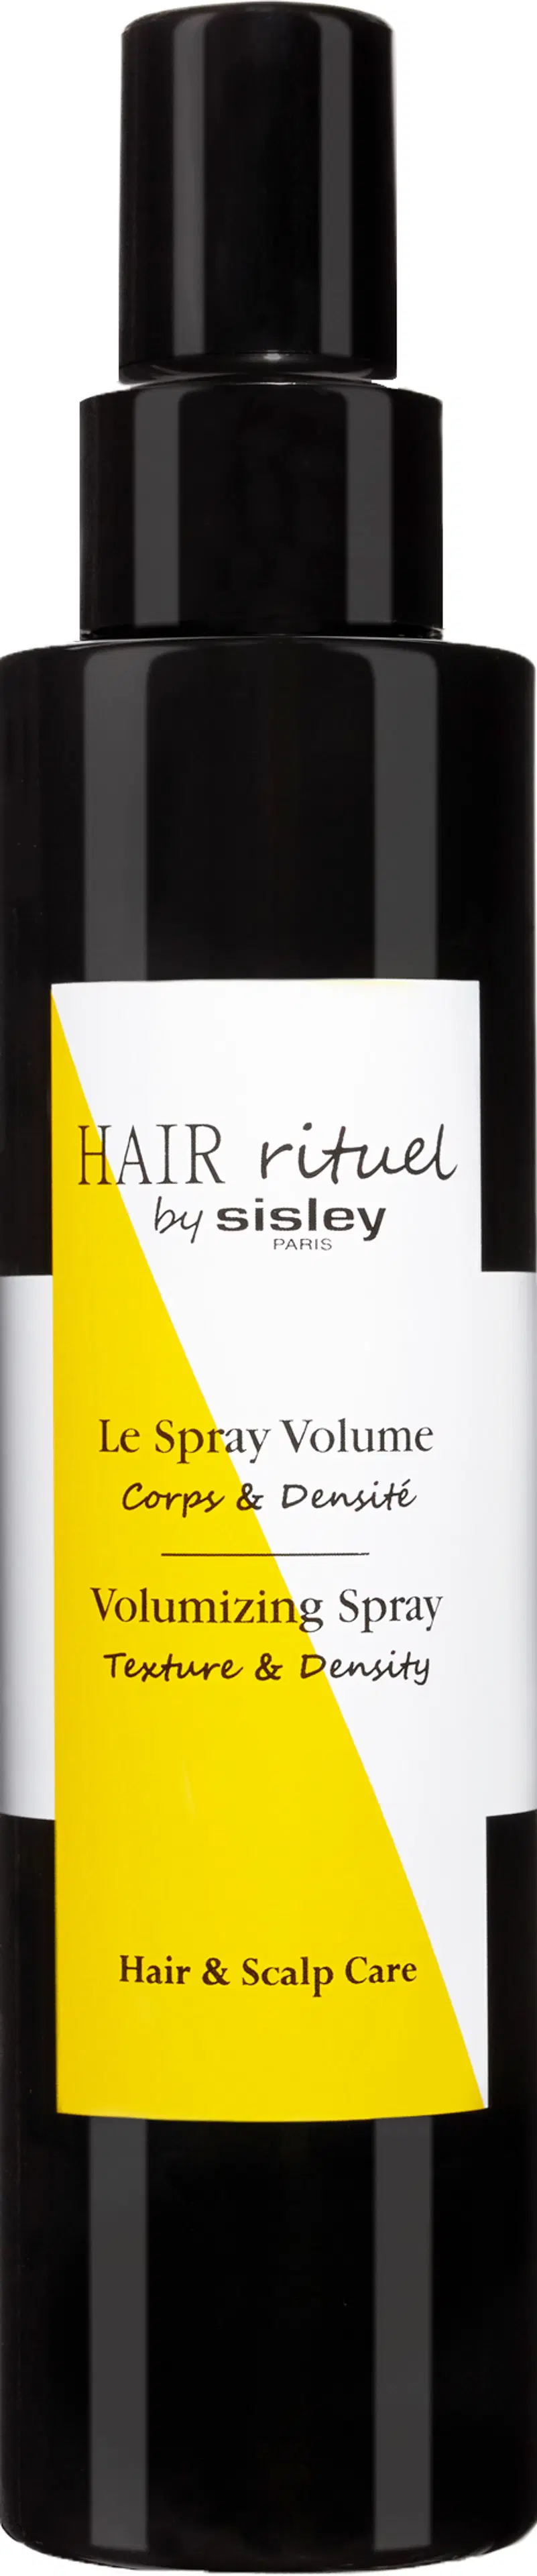 Sisley Volumizing Spray hiussuihke 150 ml